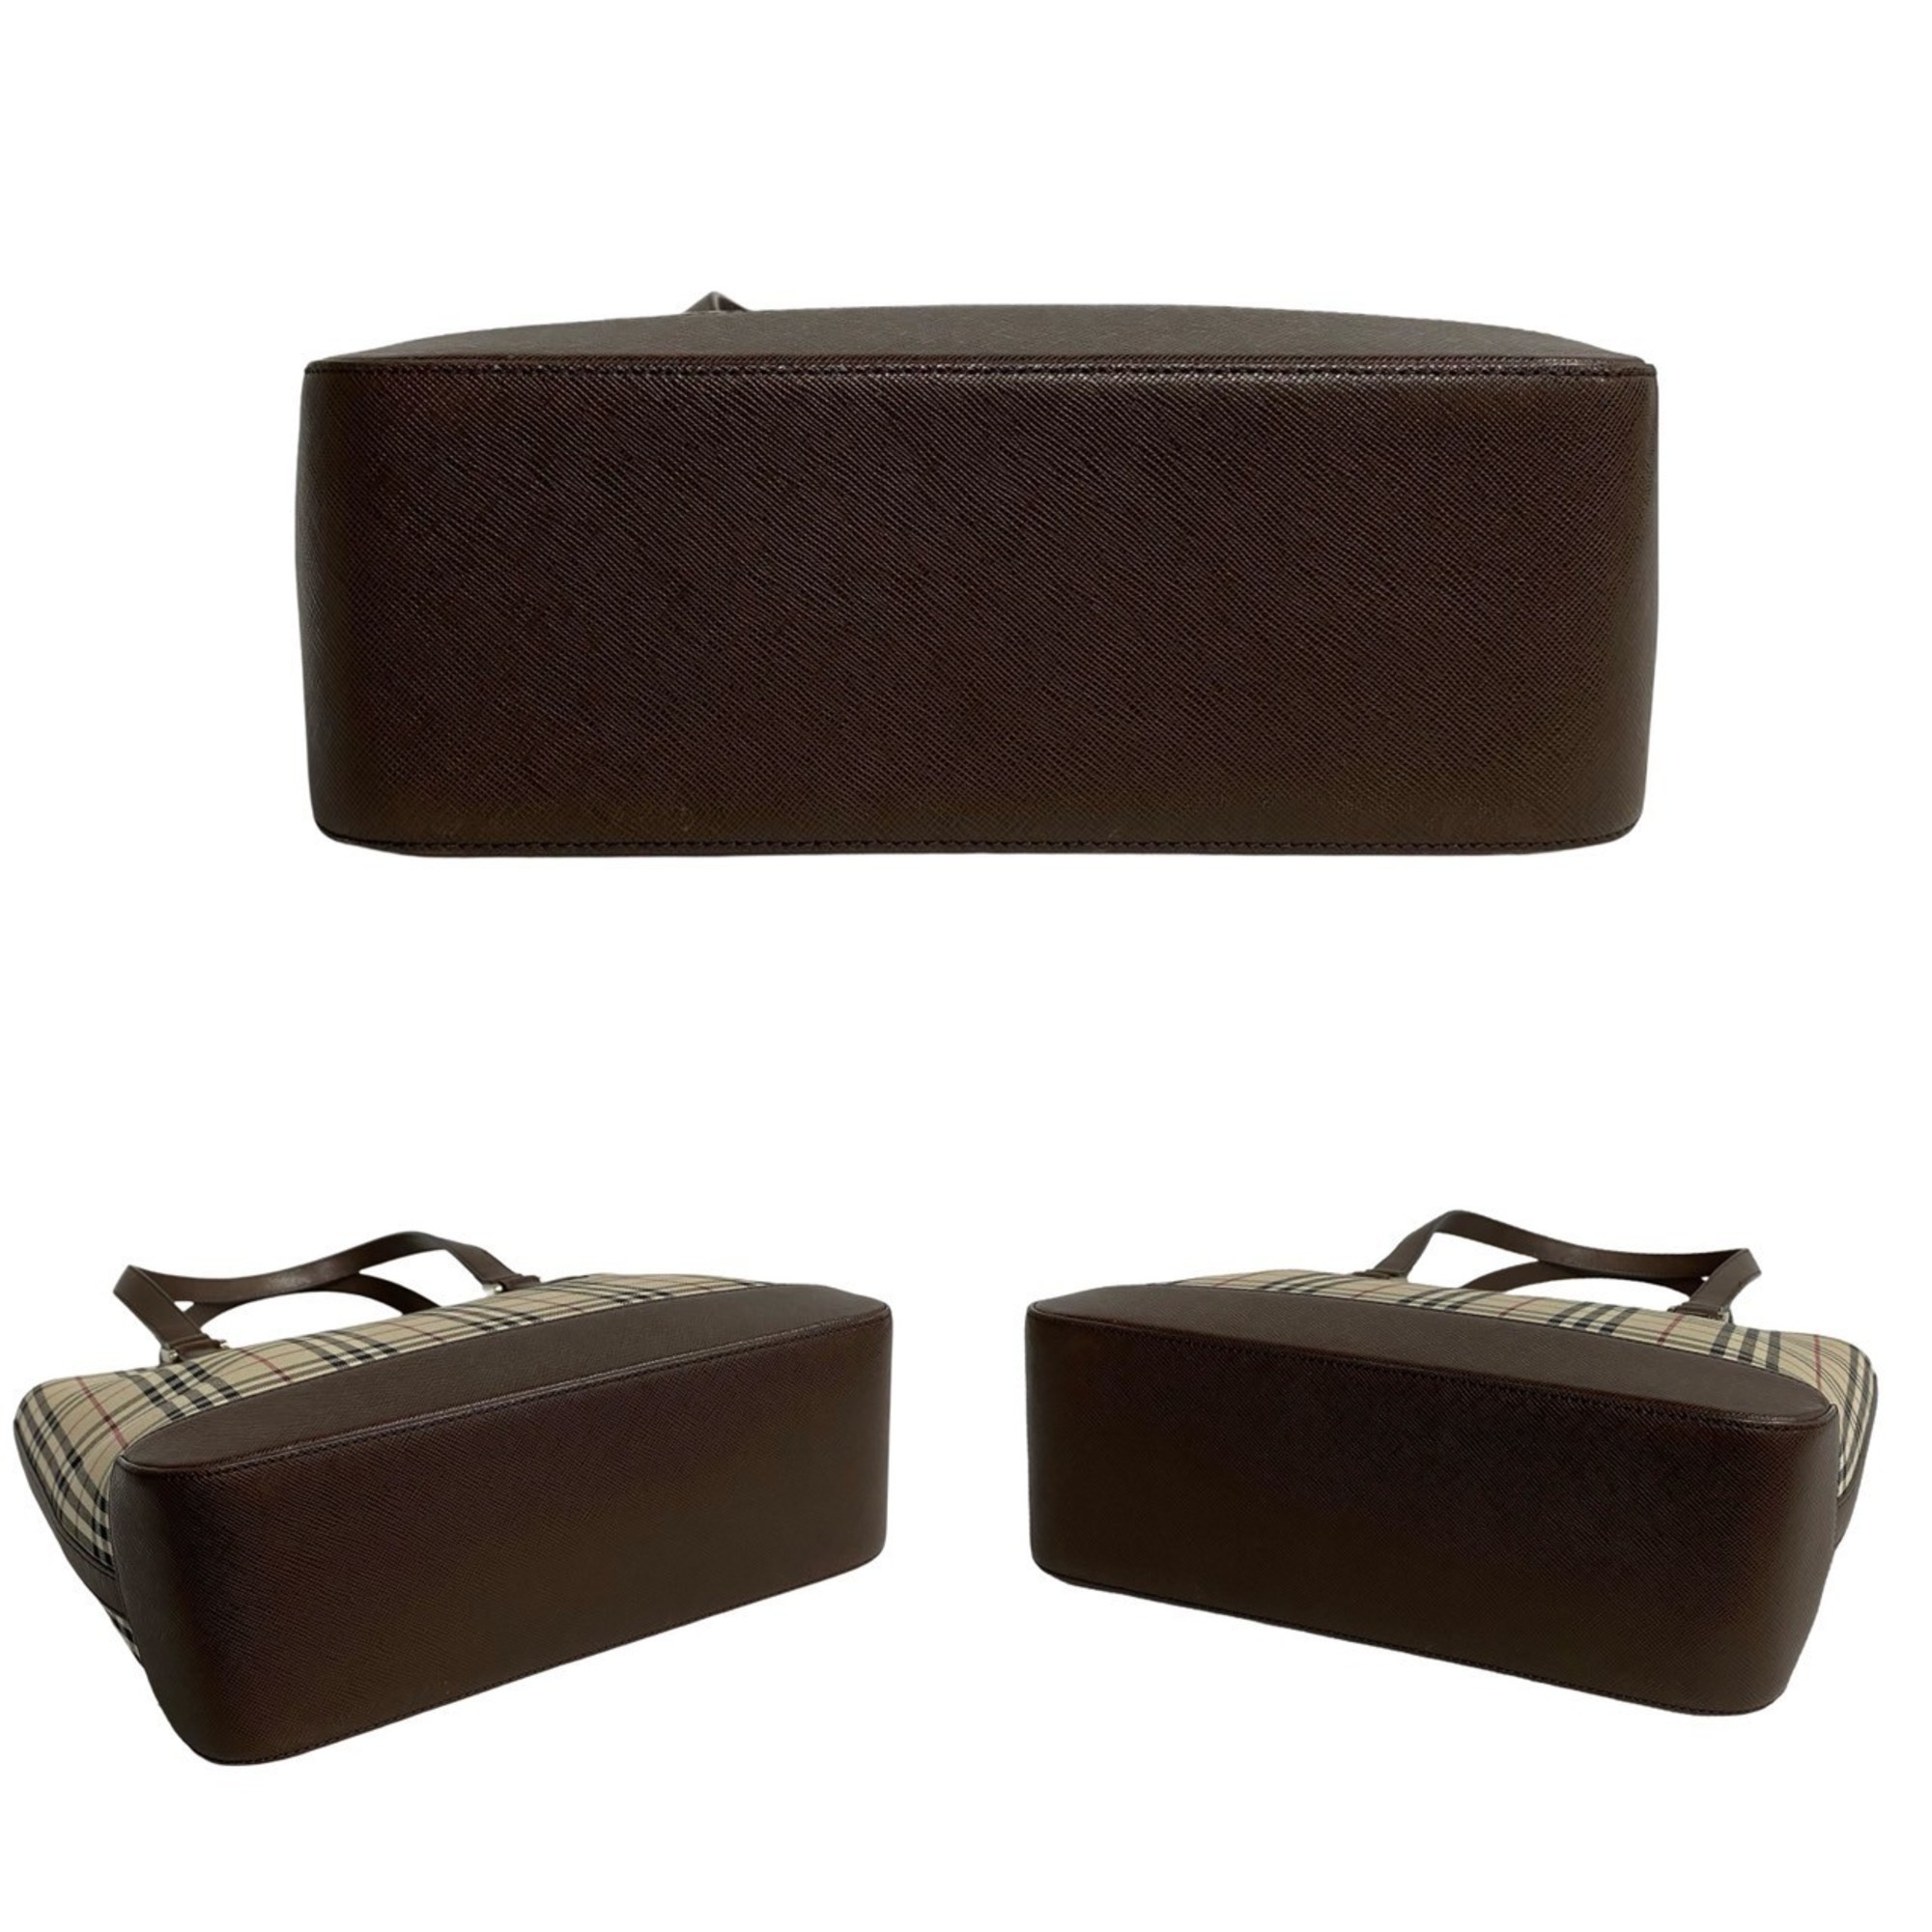 BURBERRY Nova Check Leather Canvas Tote Bag Handbag Brown Beige 28803